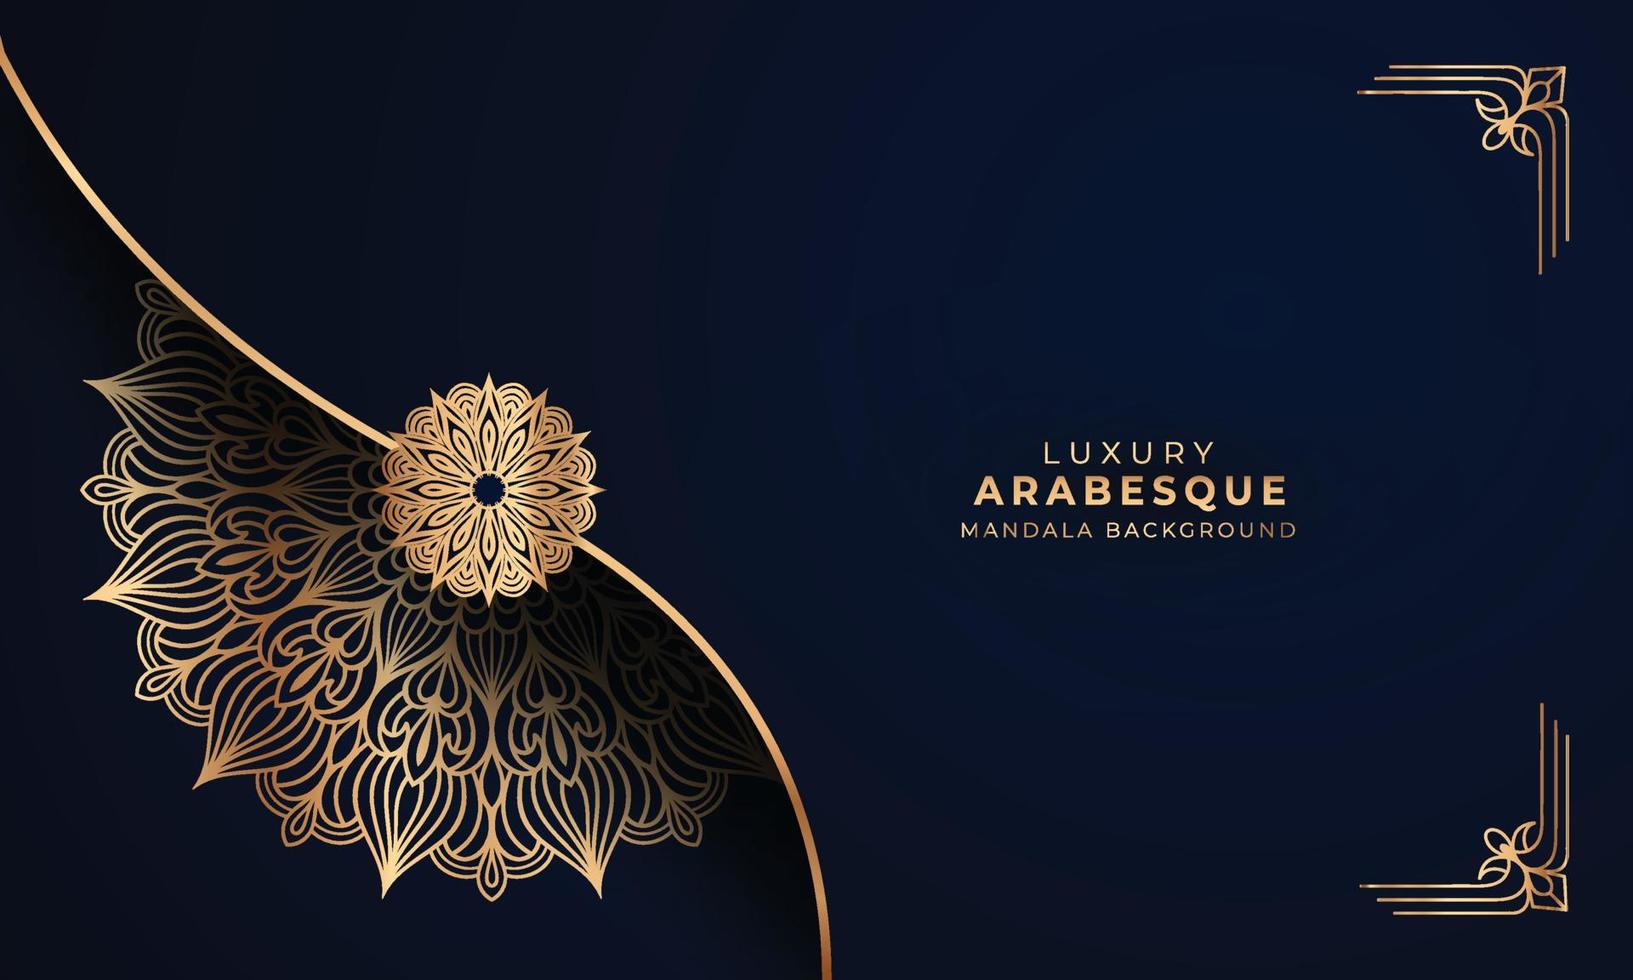 Luxury mandala background with golden arabesque pattern, decorative ornamental mandala for invitation card, book cover, poster, print vector